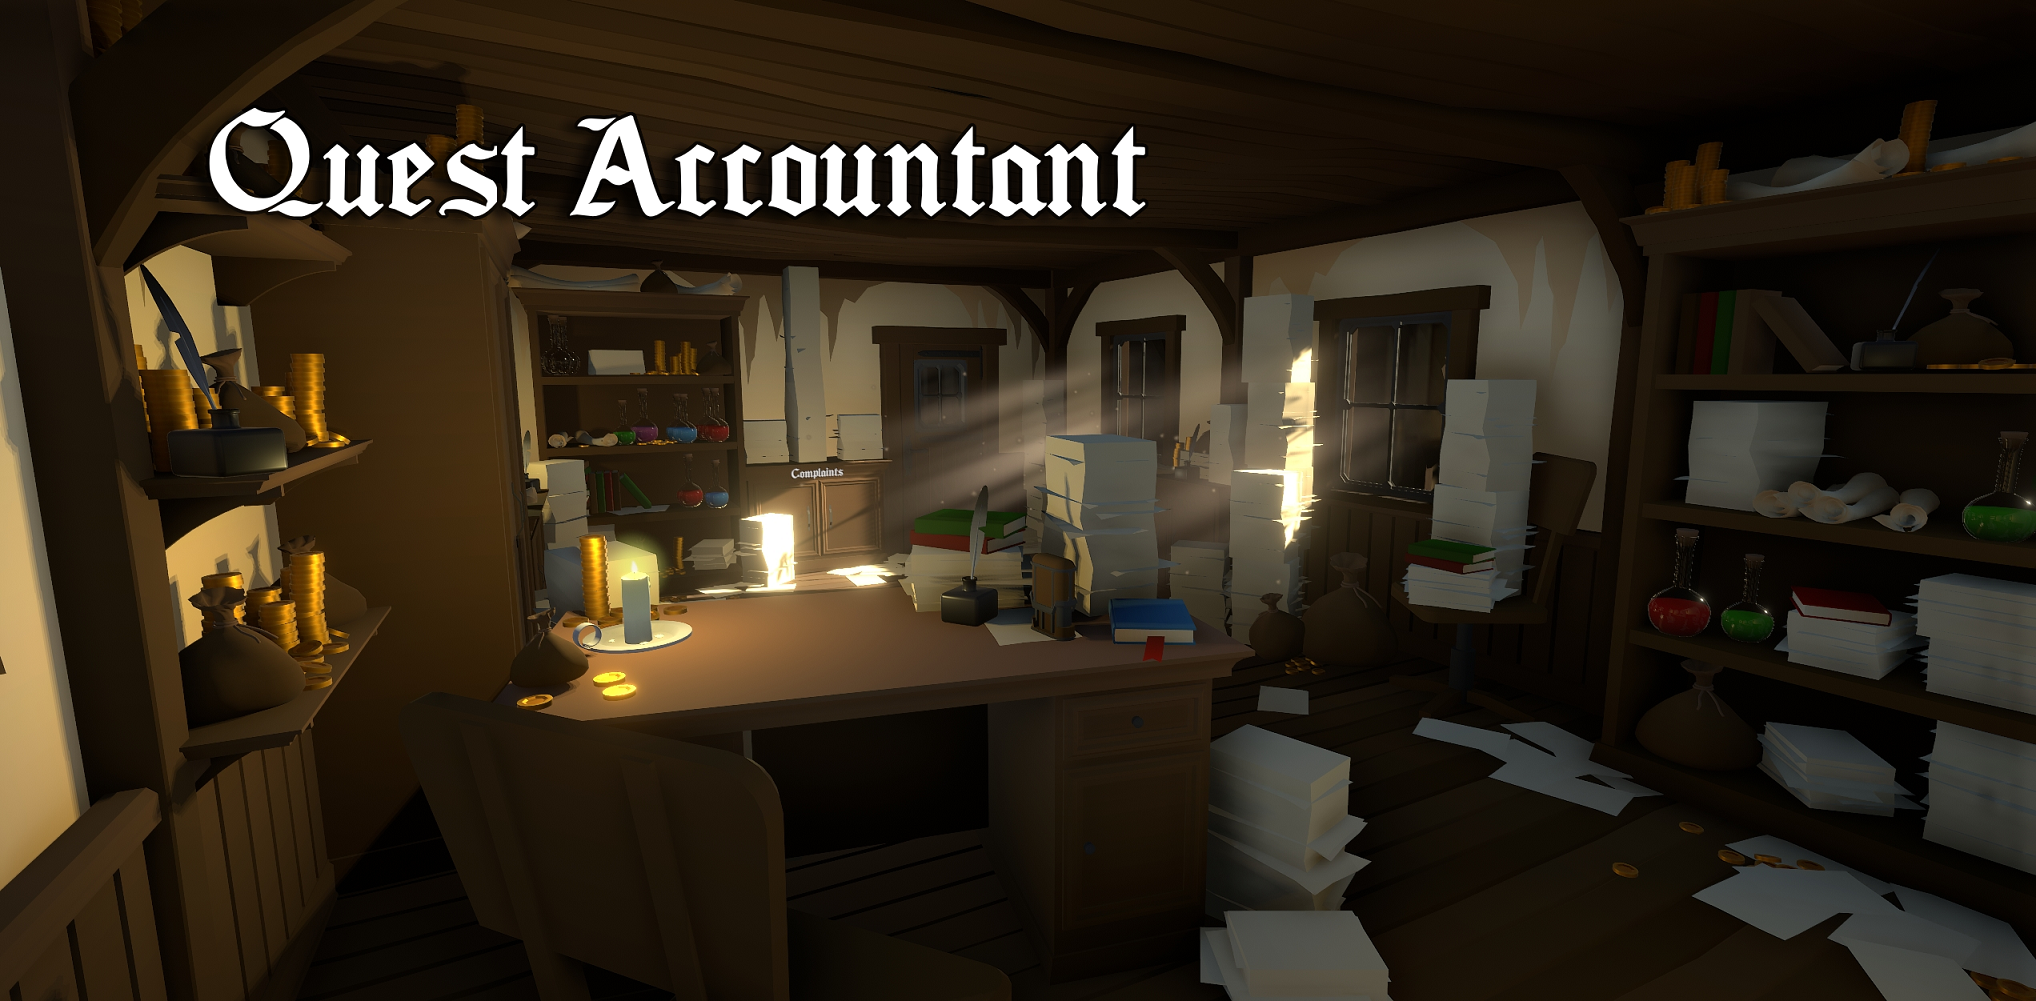 Quest Accountant